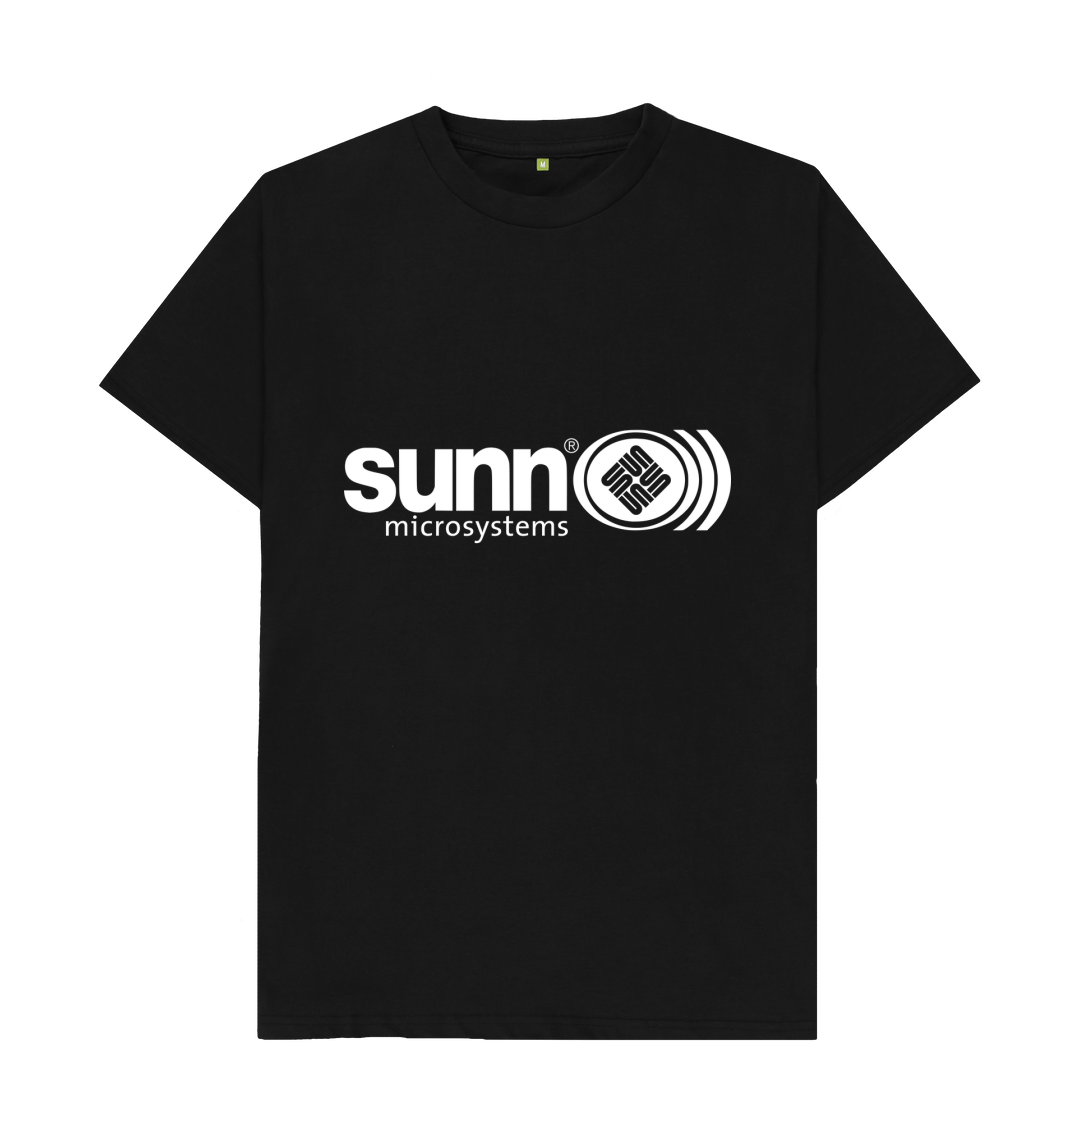 (Logo: a mashup of Sunn amplification and Sun Microsystems)